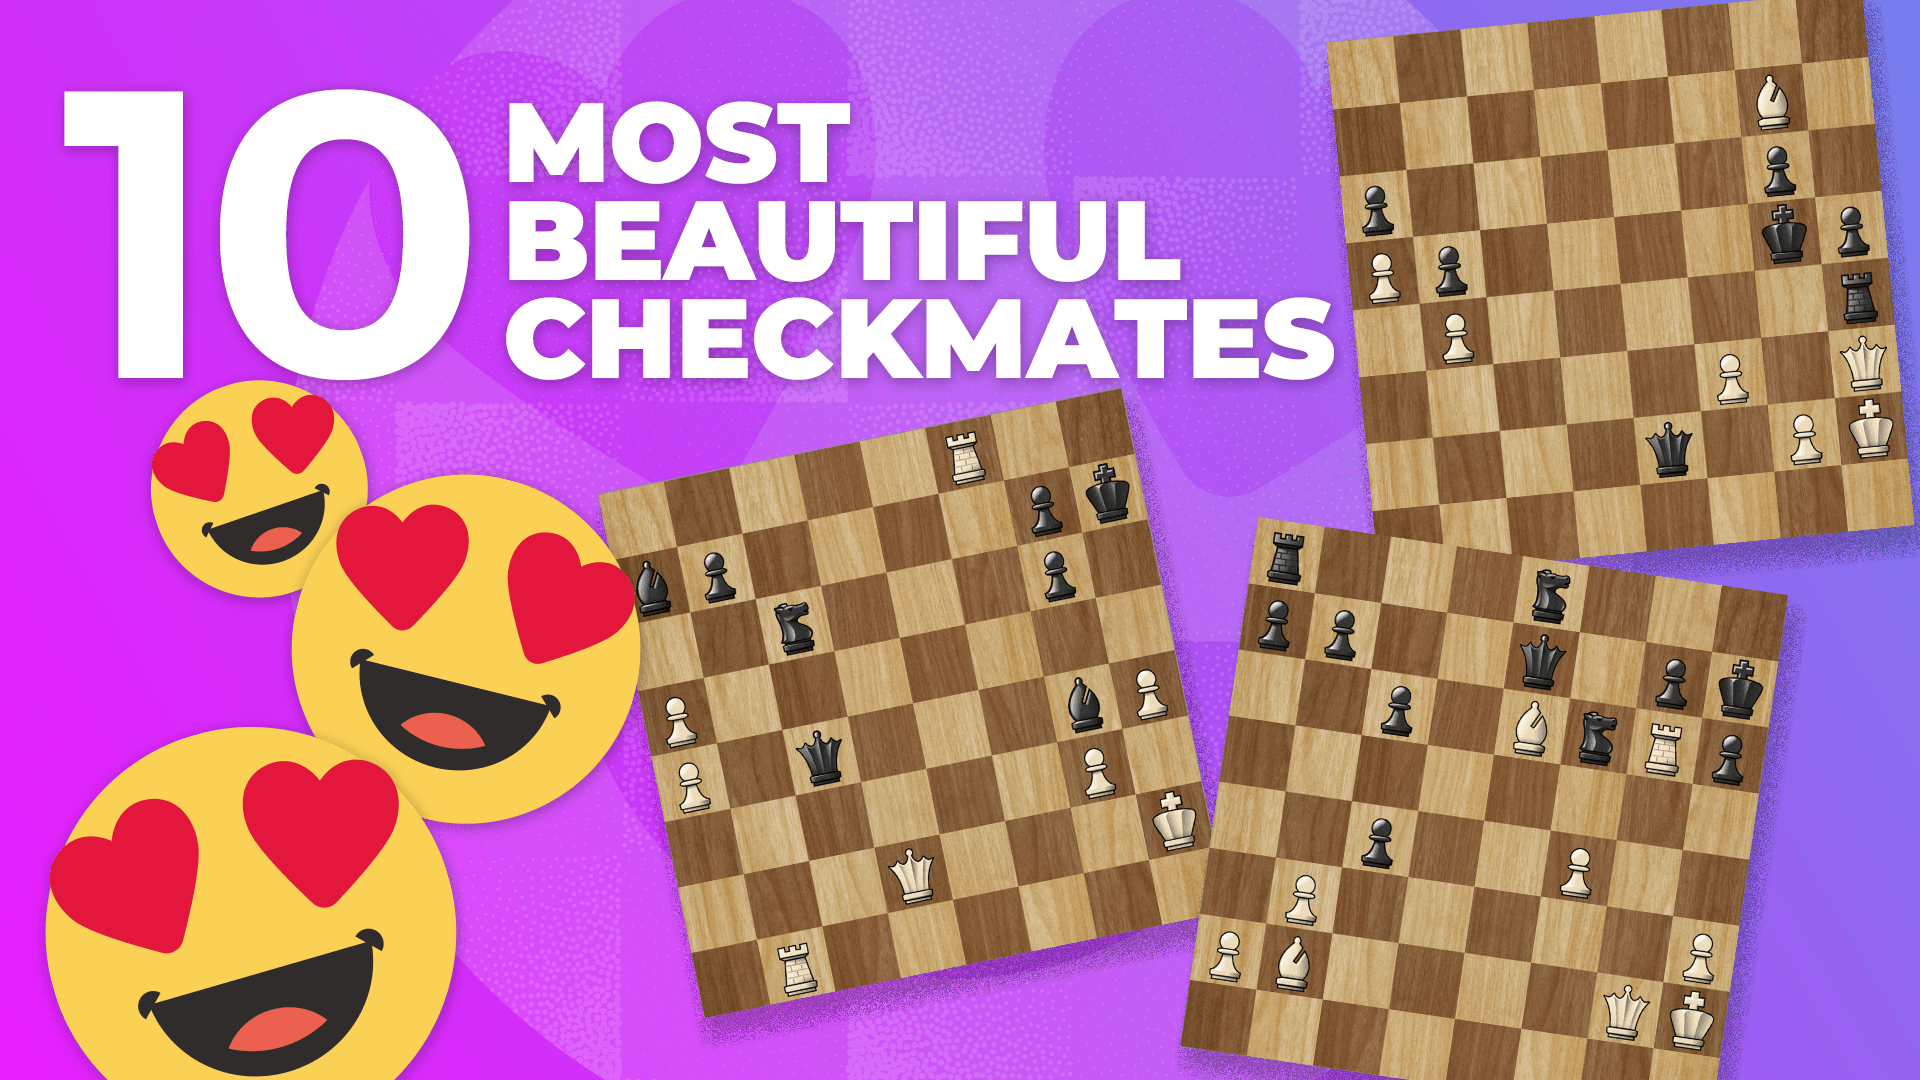 Lindo xeque mate ⚡⚡ Beautiful Checkmate #ajedrez #chess #xadrez